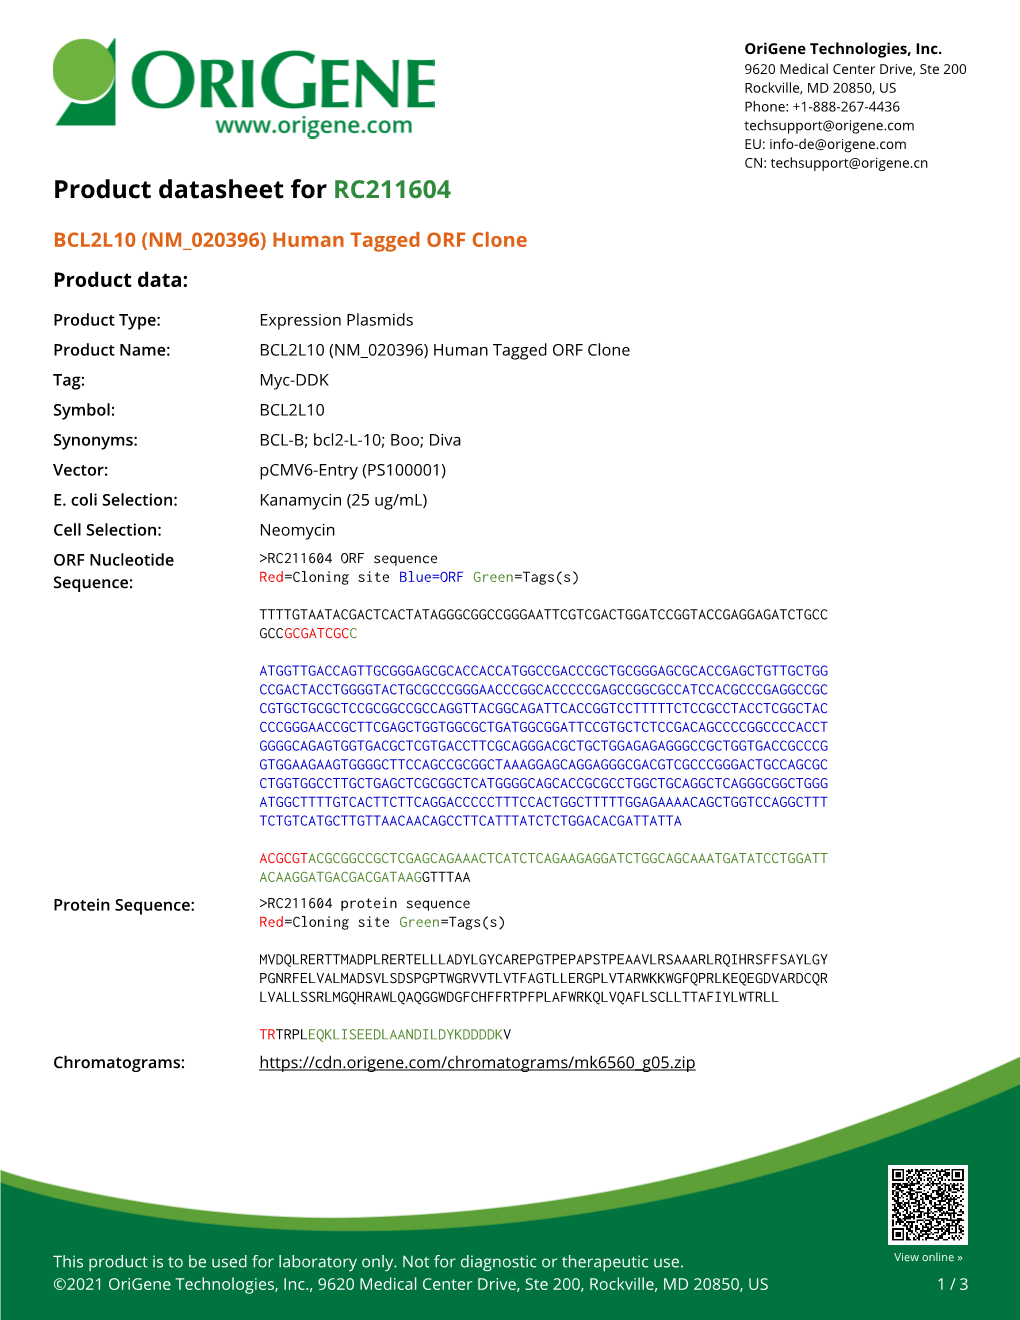 BCL2L10 (NM 020396) Human Tagged ORF Clone Product Data